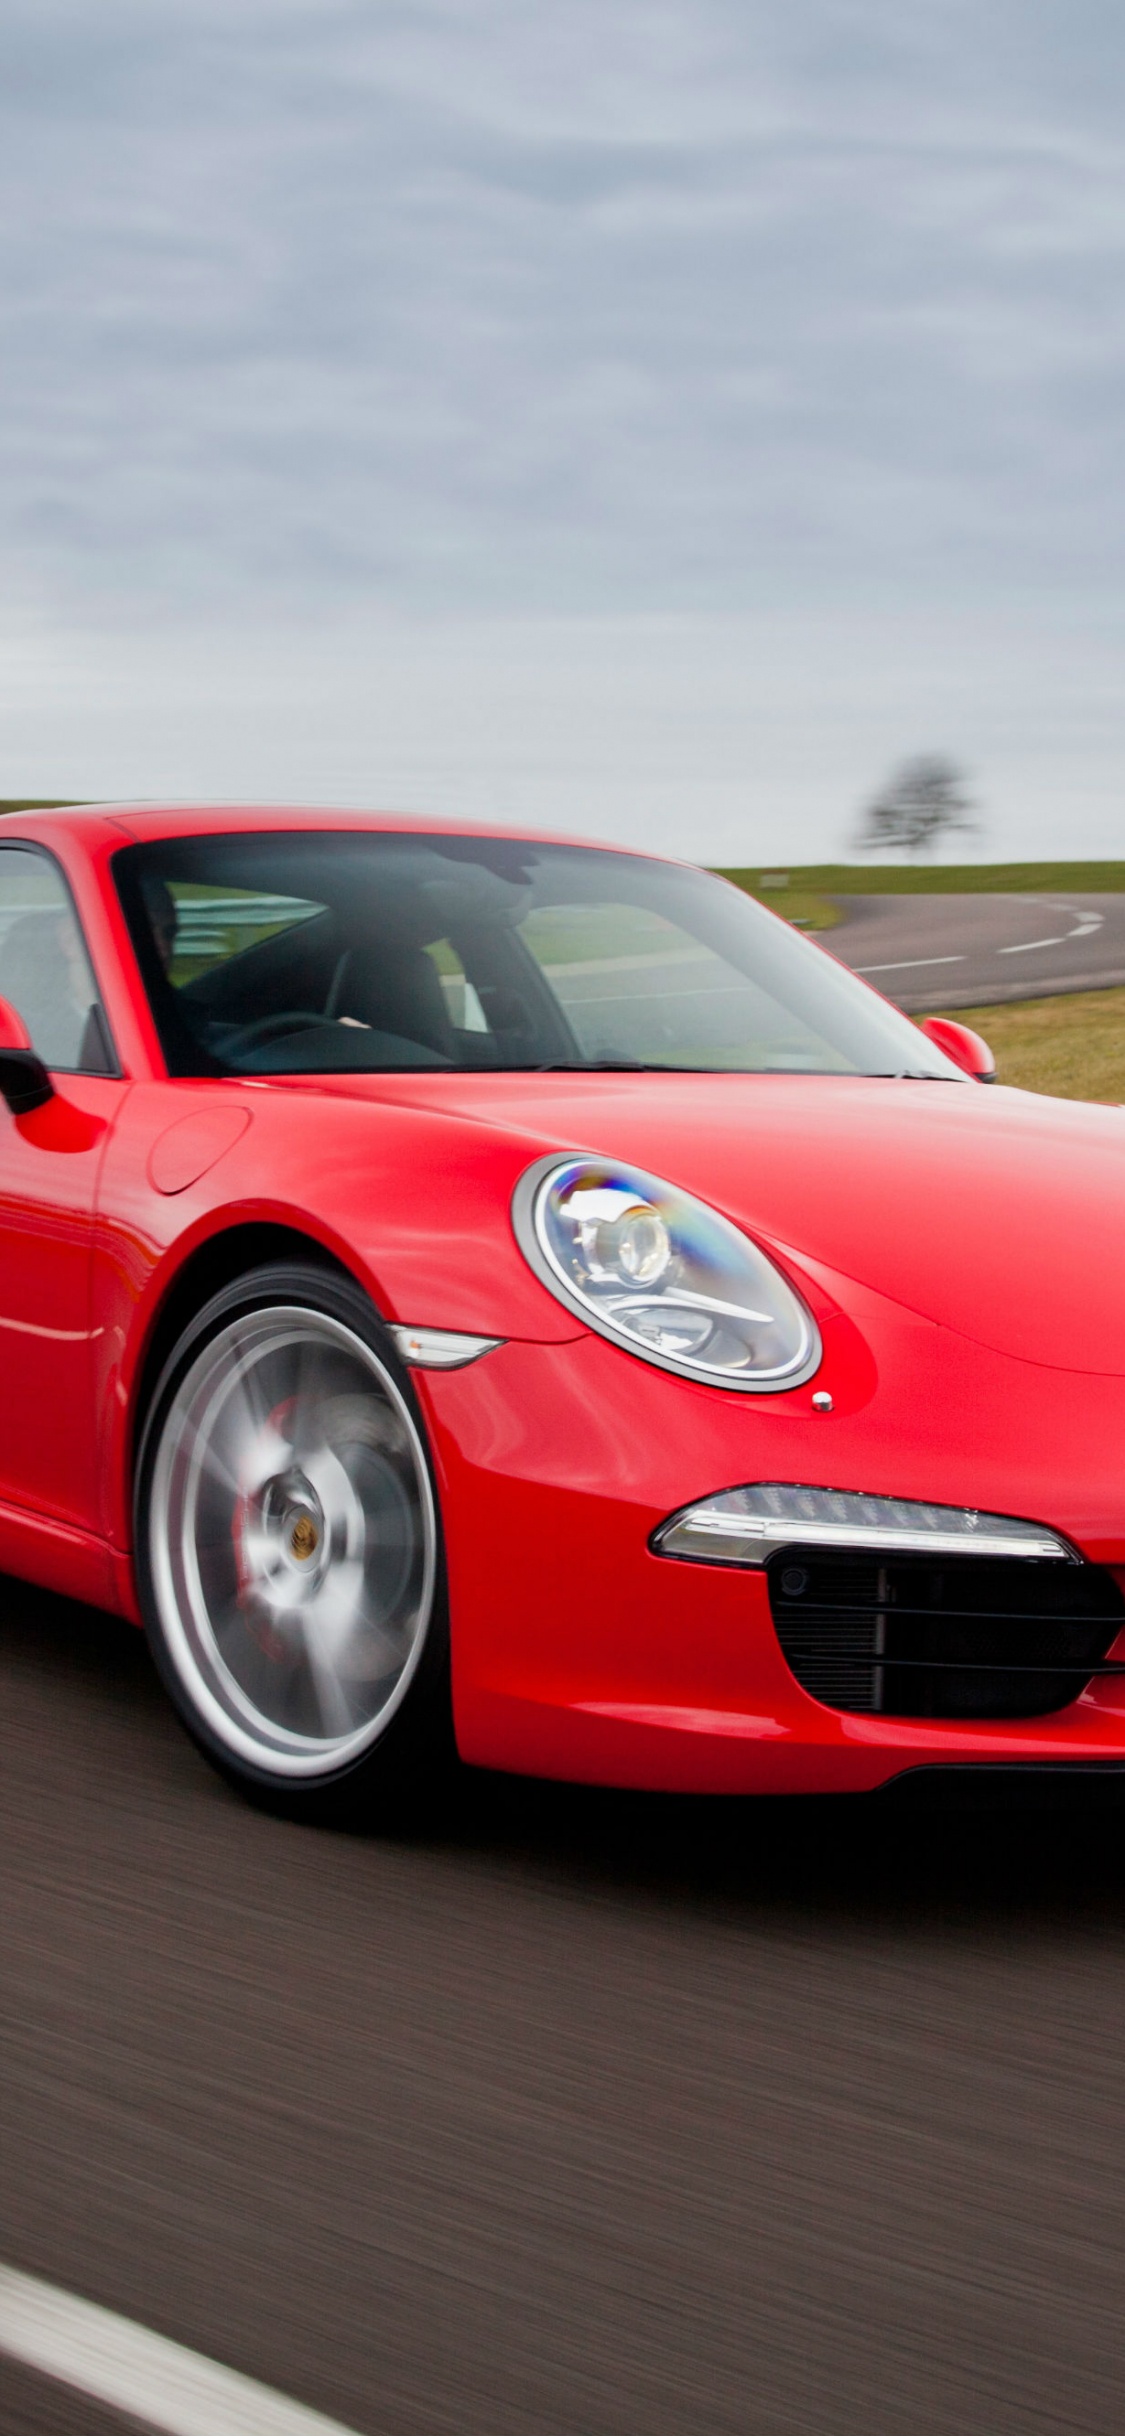 Red Porsche 911 on Road During Daytime. Wallpaper in 1125x2436 Resolution